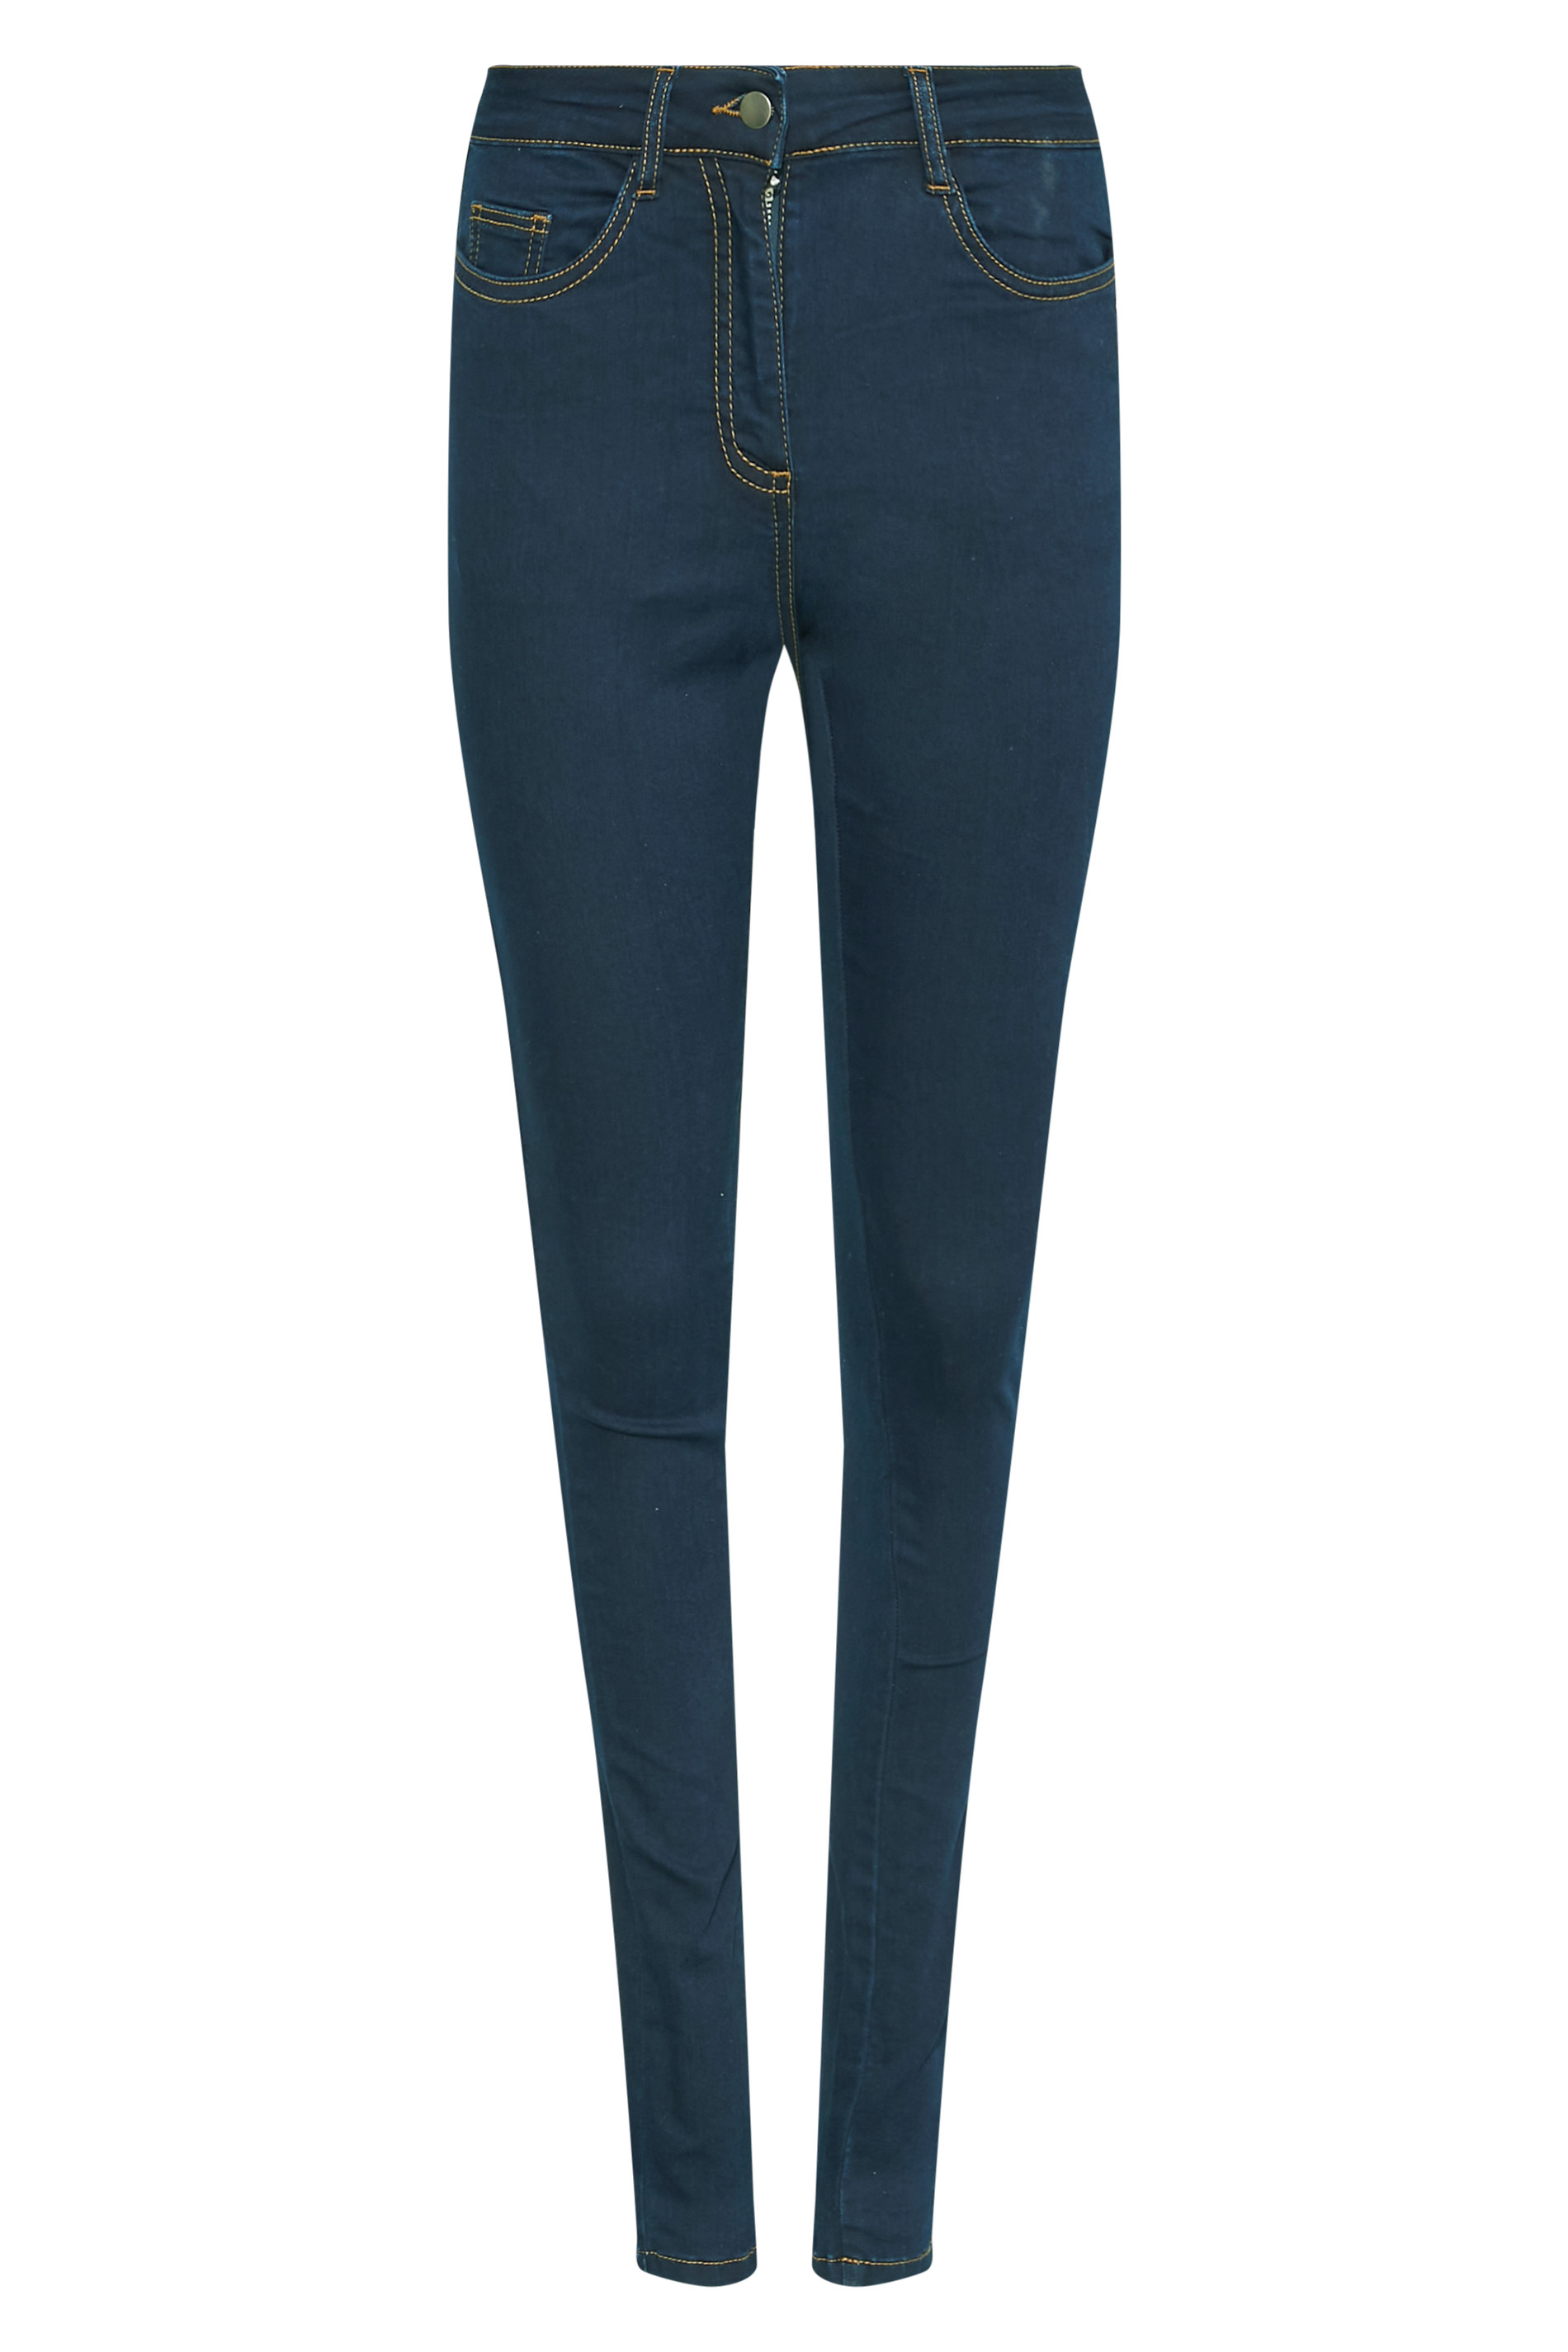 LTS Tall Women's Indigo Blue Washed AVA Skinny Jeans | Long Tall Sally 2